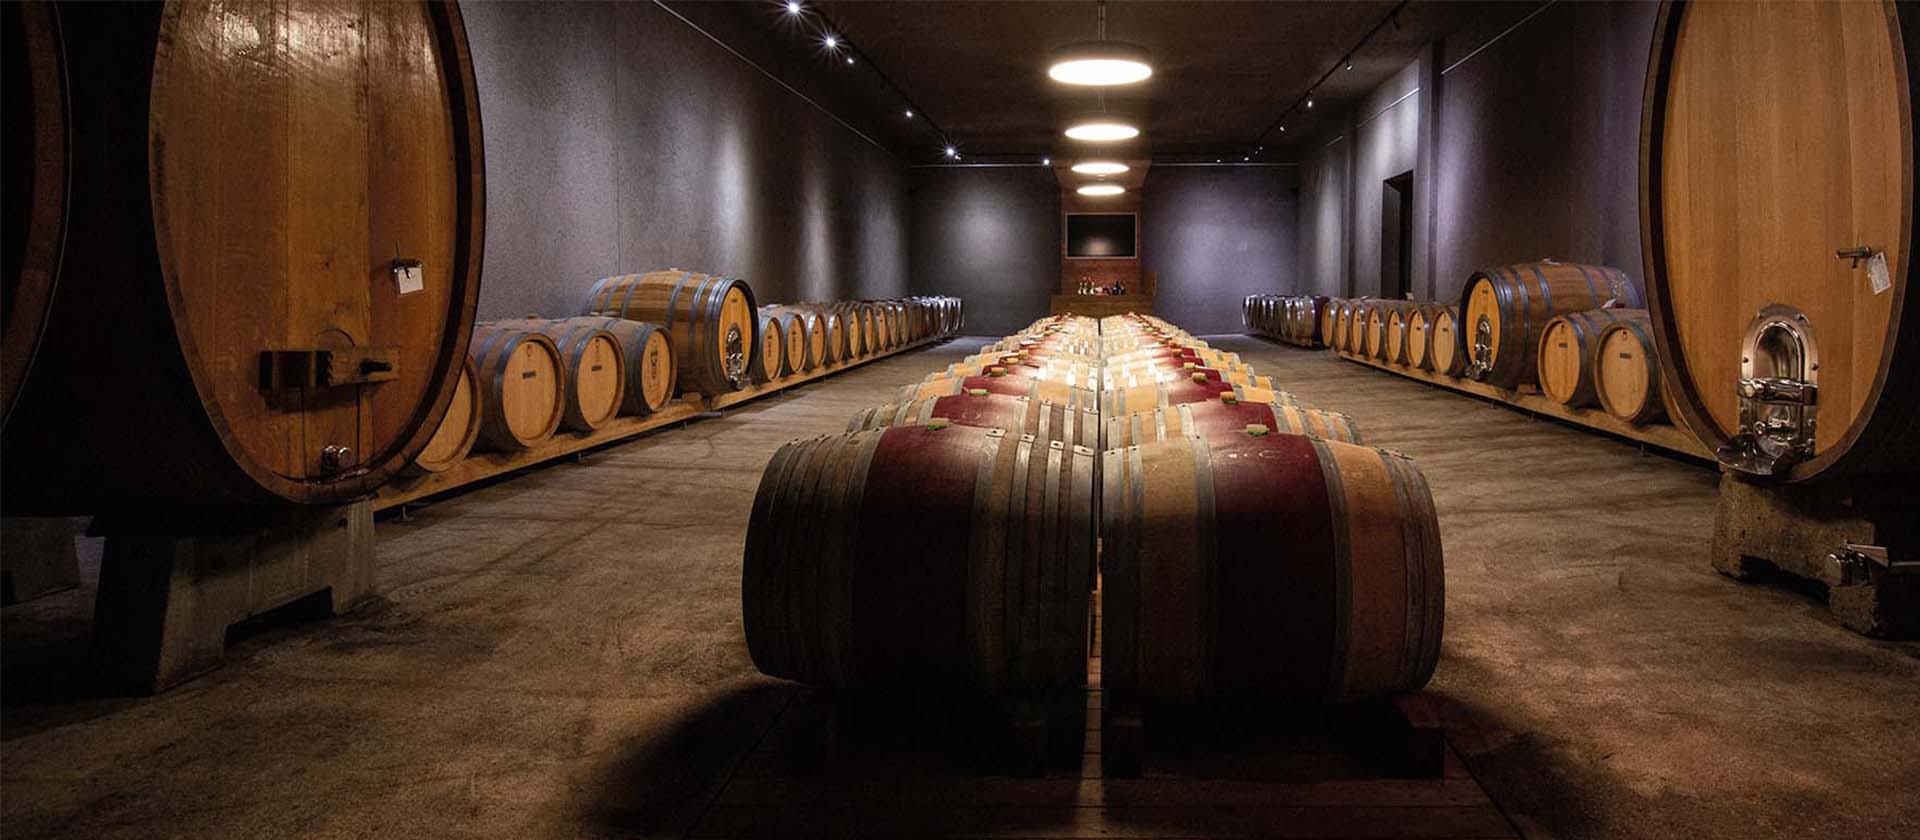 Room with barrels in Digital Wine Press Hall Kitzingen